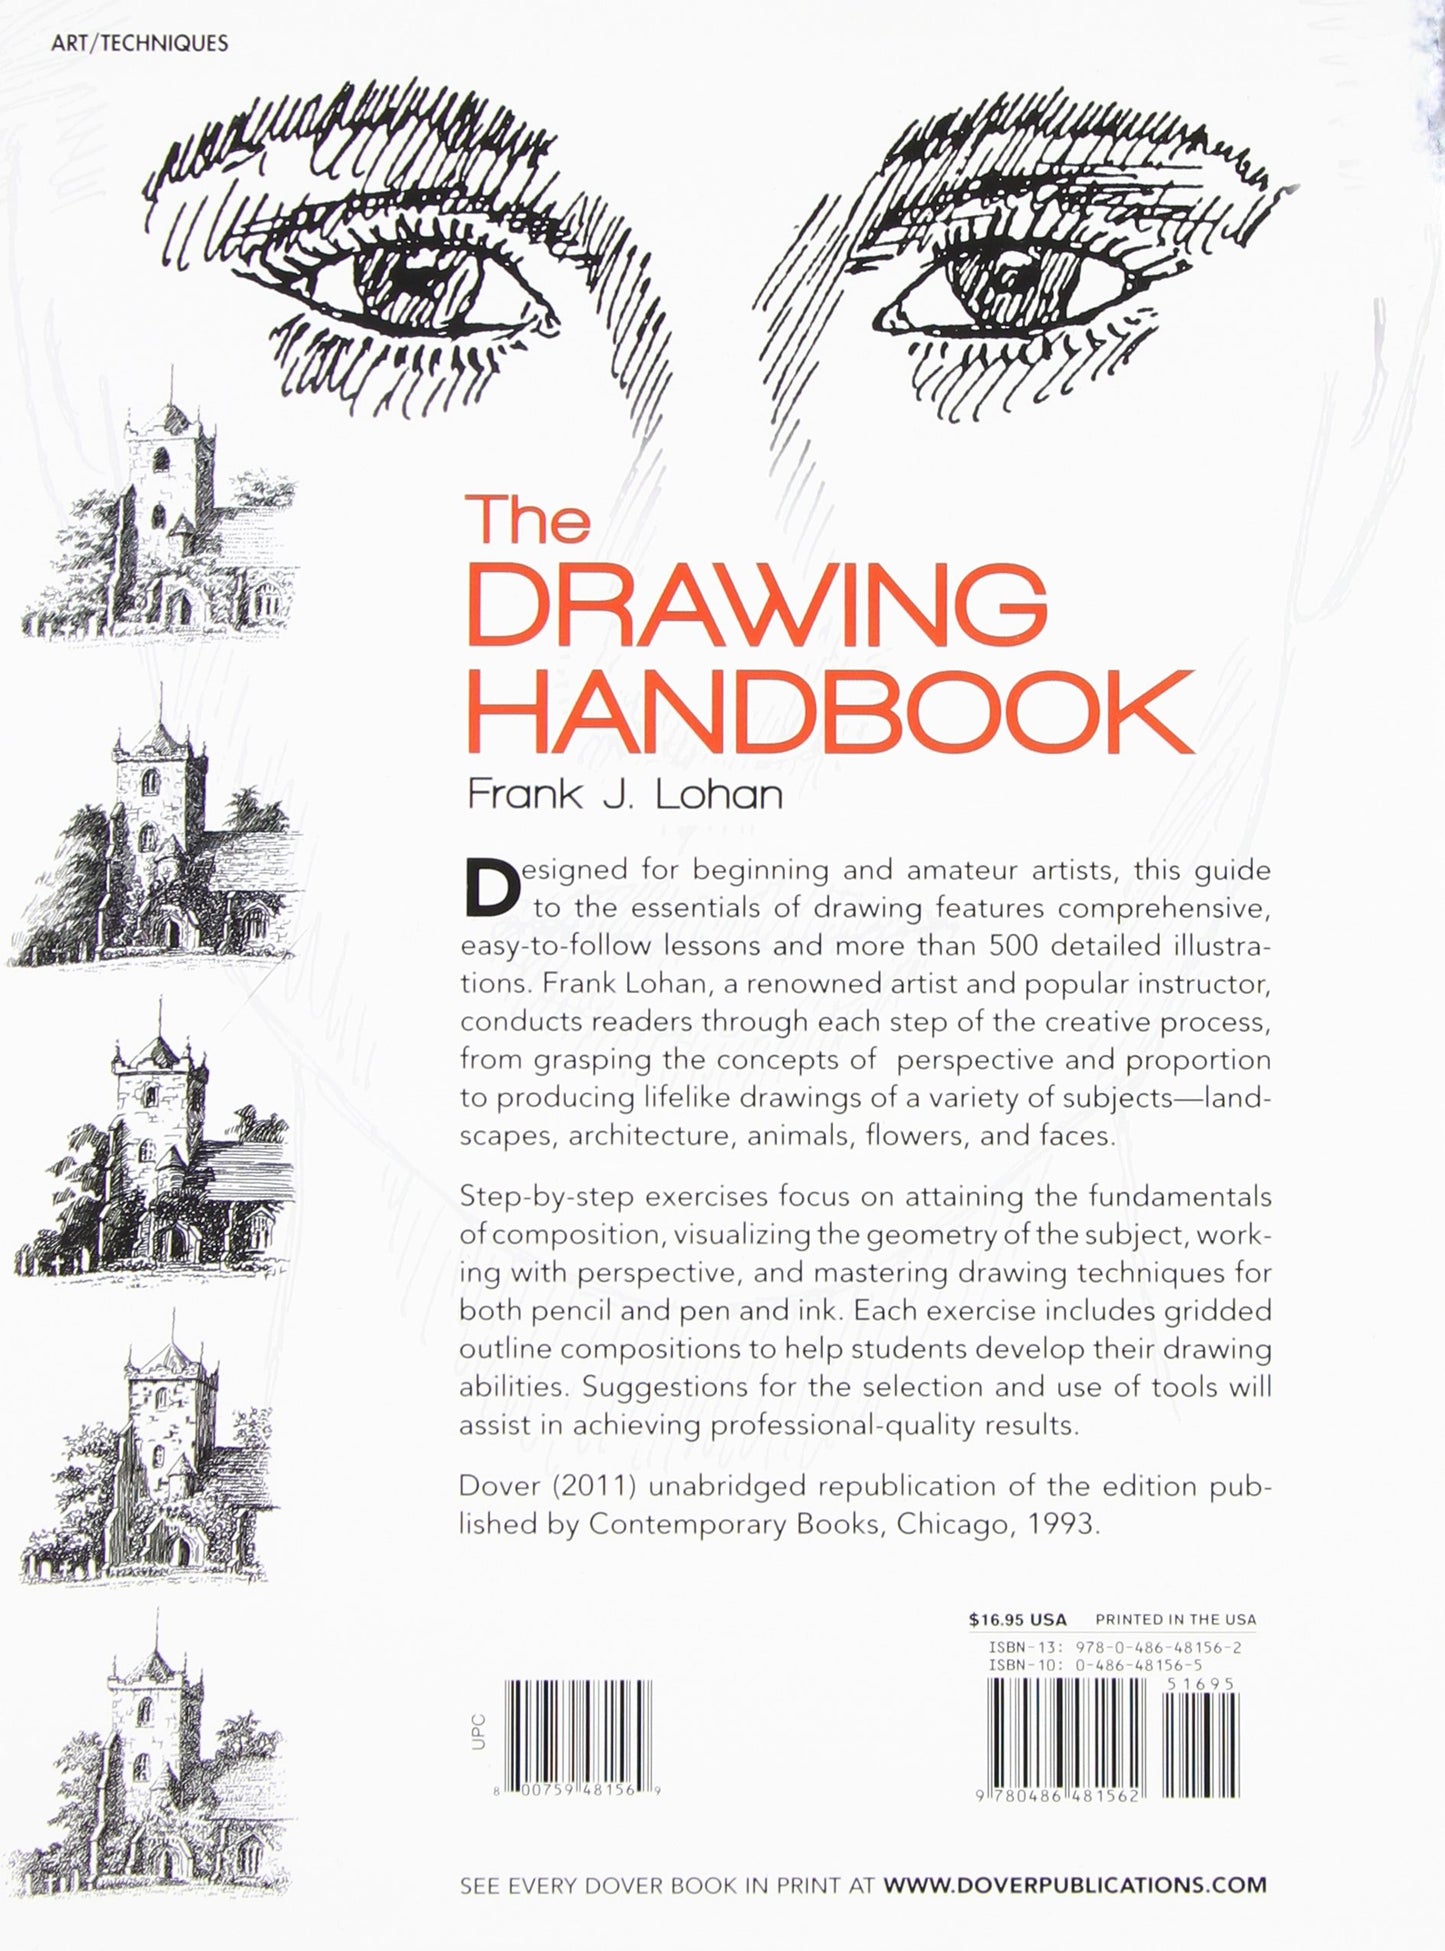 Bright Education Australia, Teacher Resources, Visual Art, Art, Book, drawing, painting, The Drawing Handbook